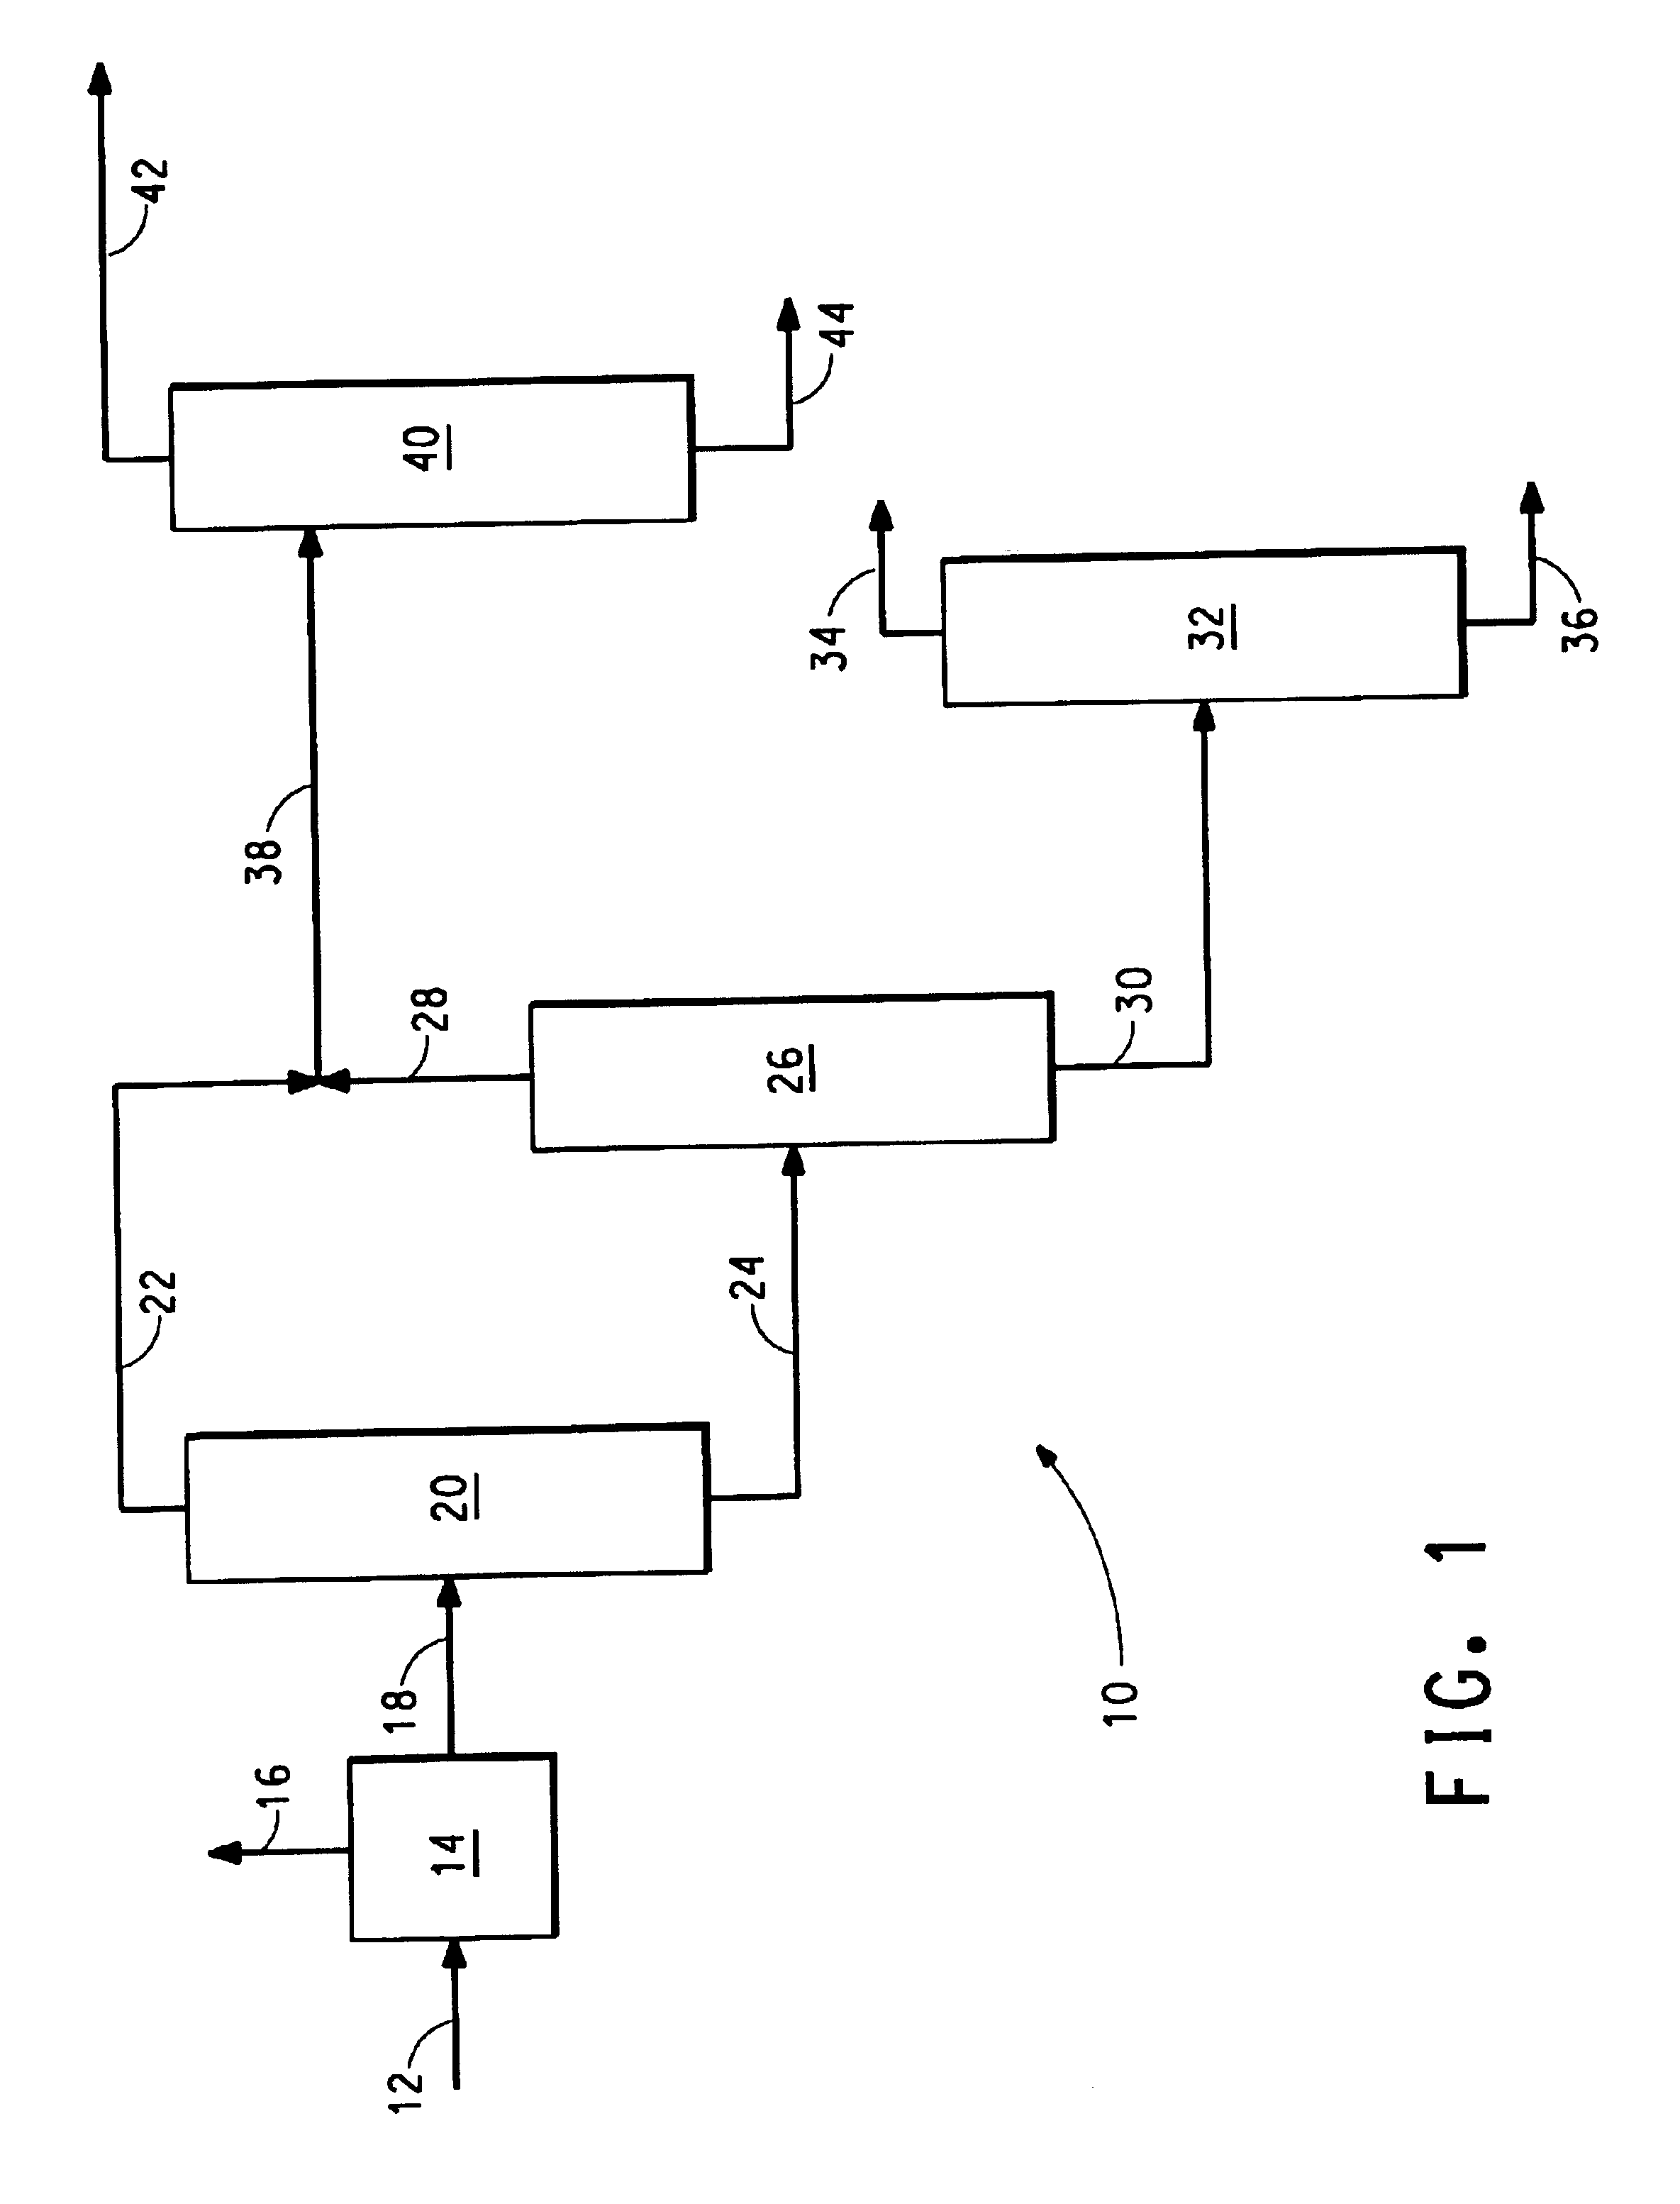 Distillative method for separating hexamethylenediamine from a mixture comprising hexamethylenediamine, 6-aminocapronitrile and tetrahydroazepine